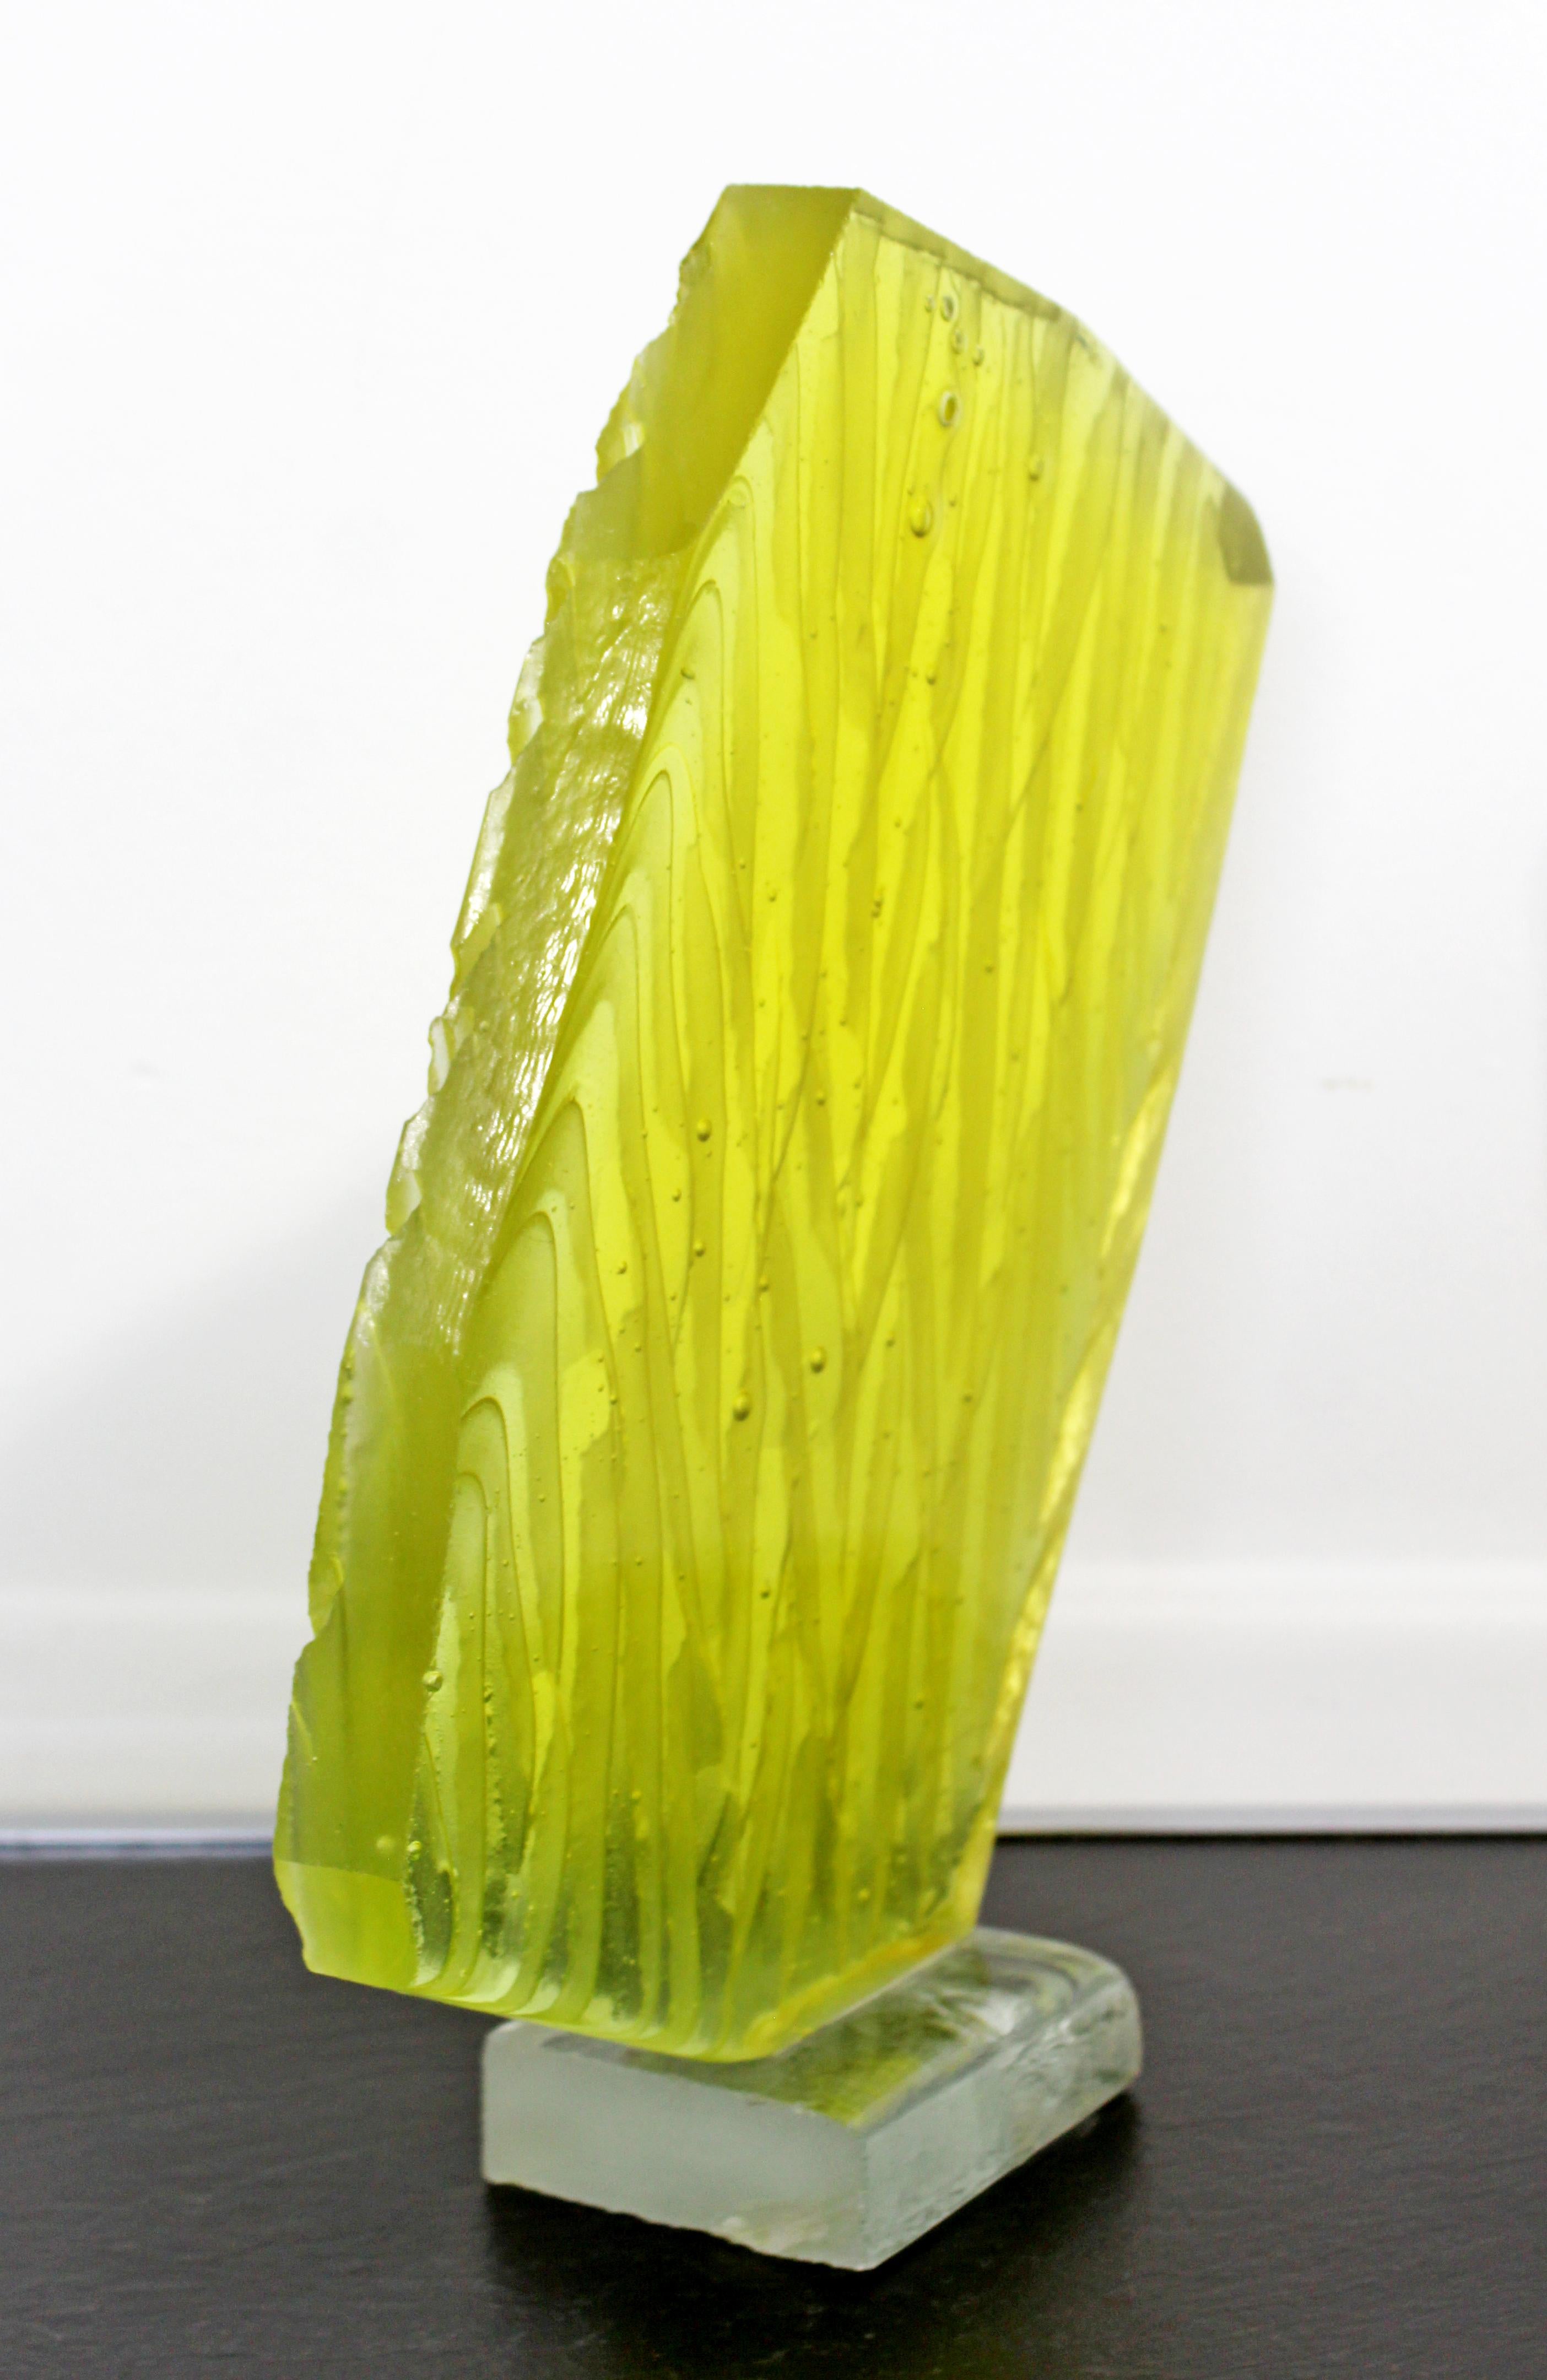 Contemporary Cast Glass Abstract Art Table Sculpture Signed Rezu Pishgahi 2009 1